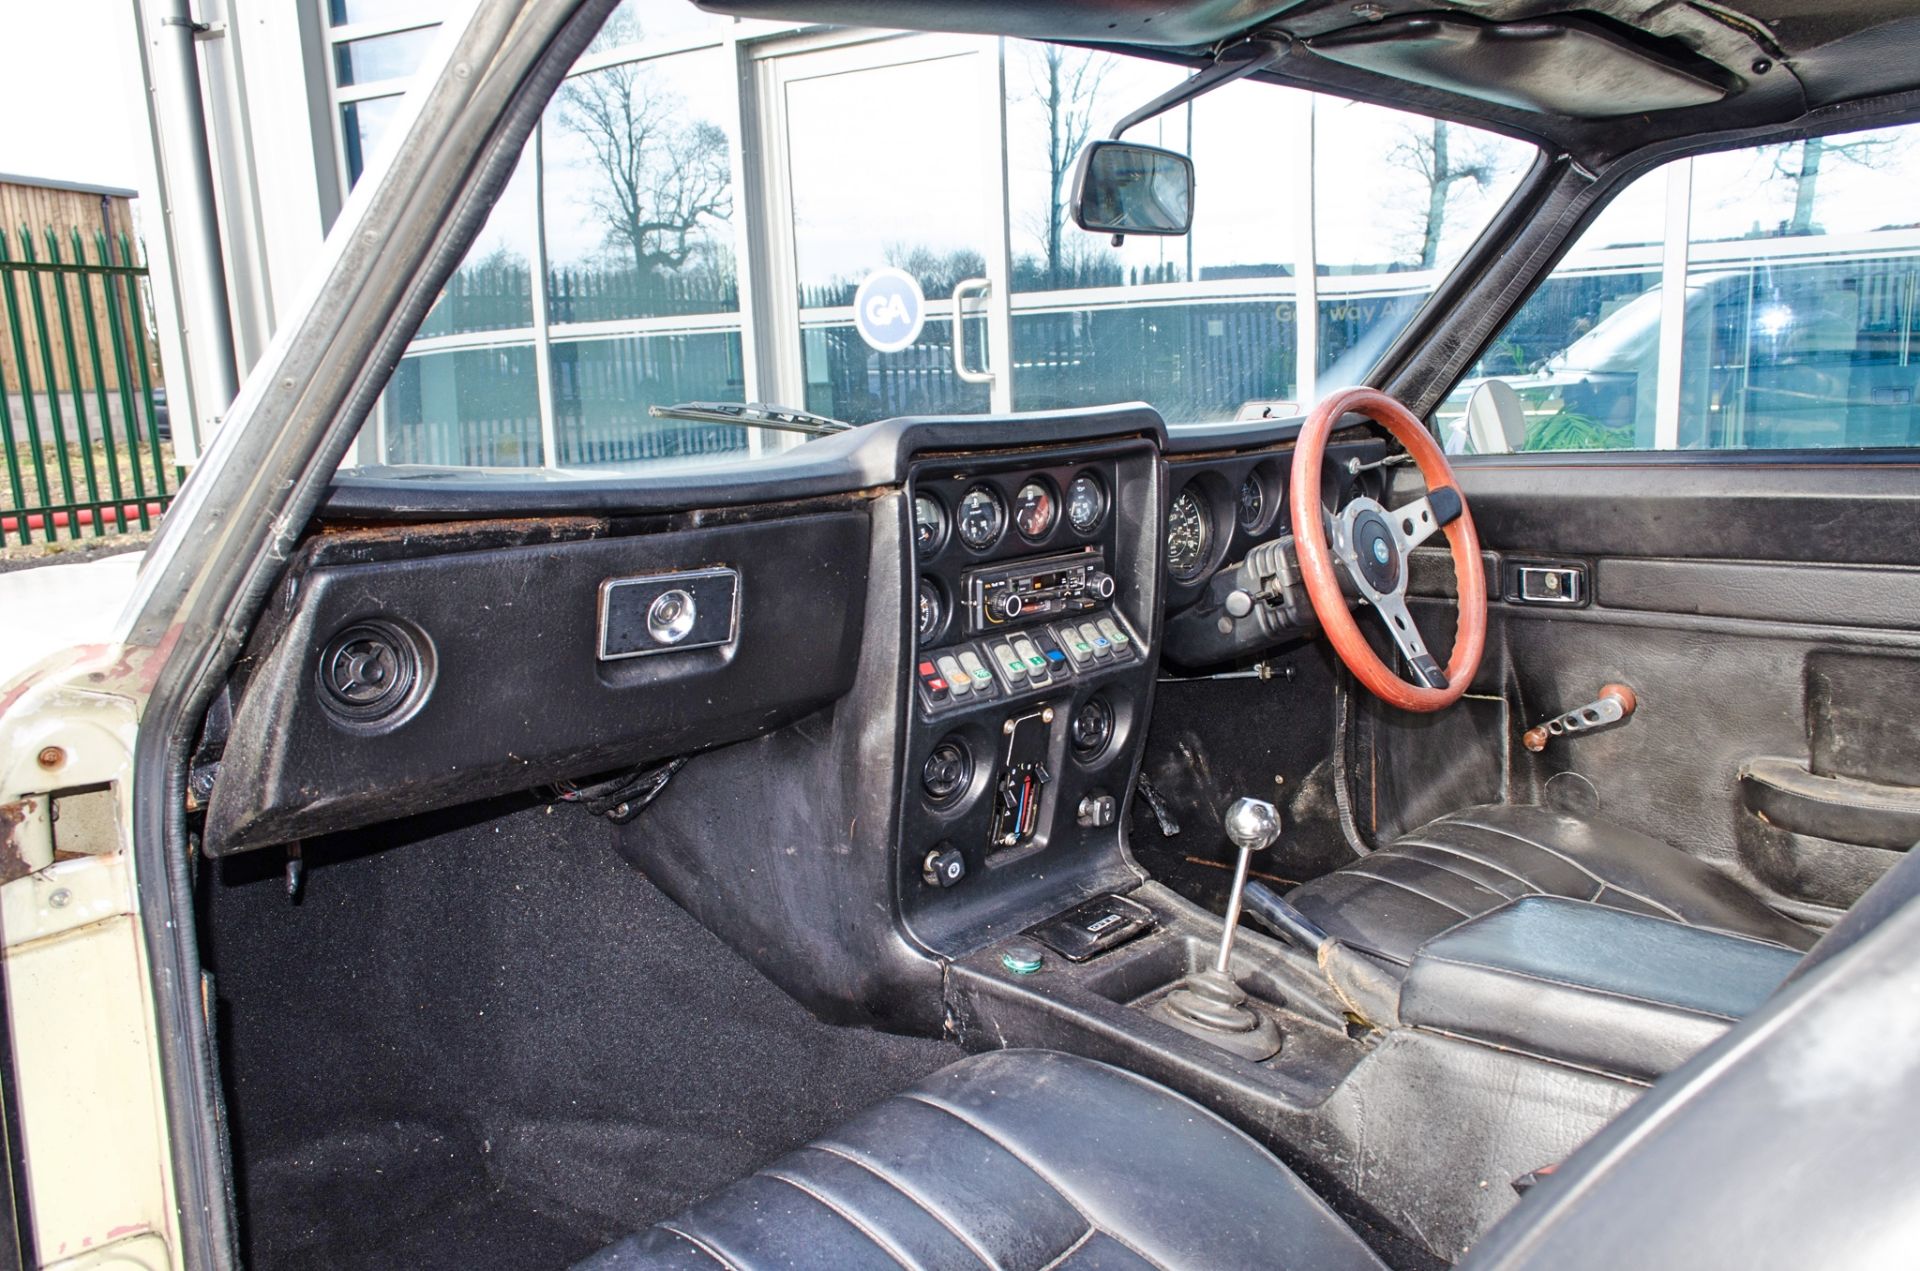 1977 Reliant Scimitar GTE E Odve 2944cc 2 door saloon - Image 35 of 56